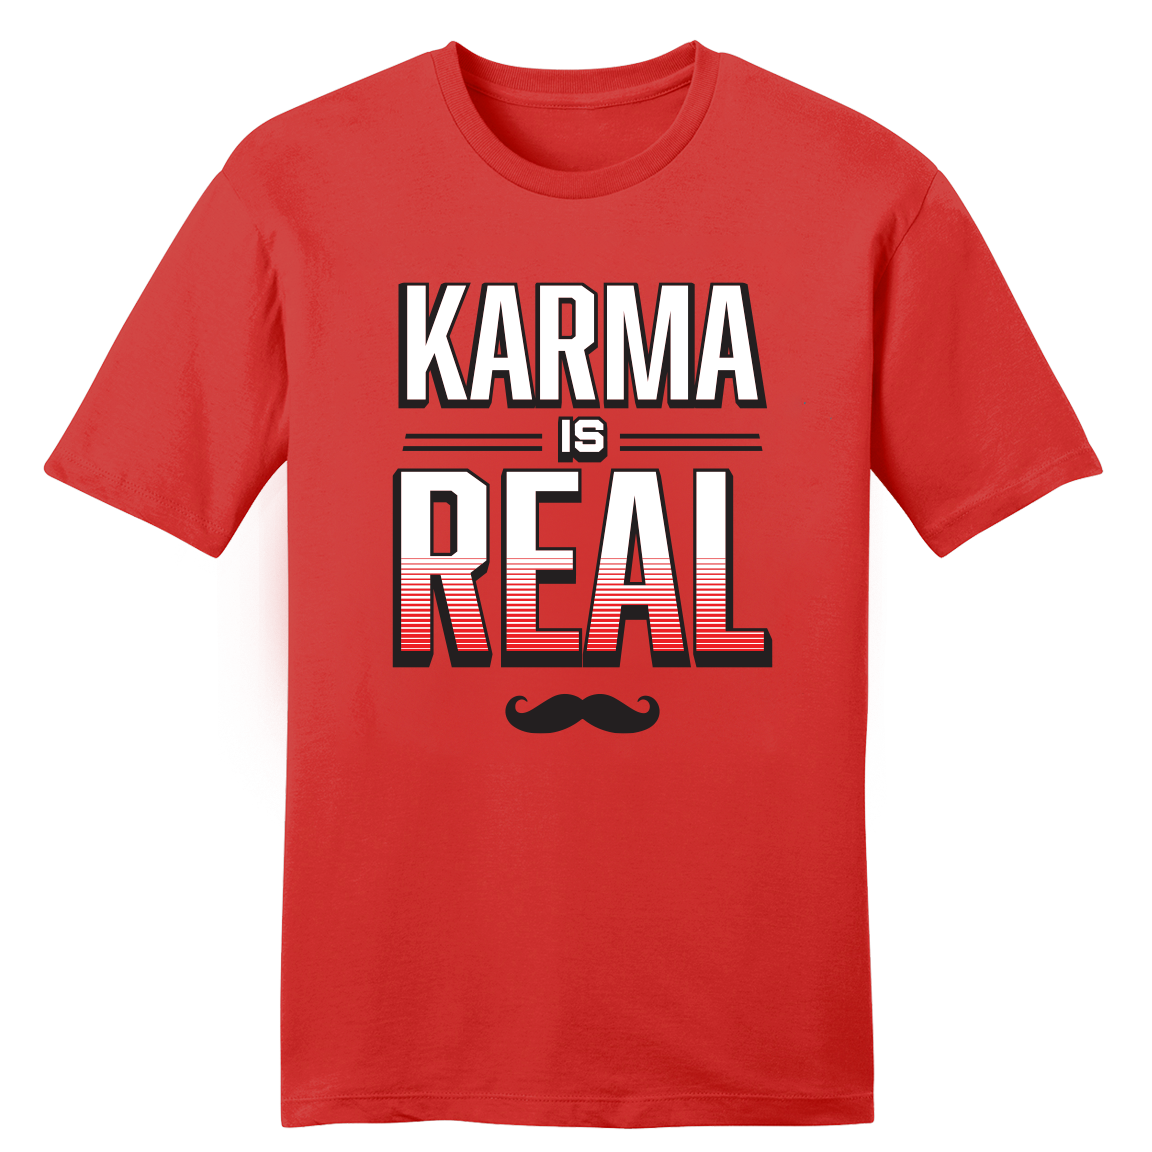 Karma is Real tee